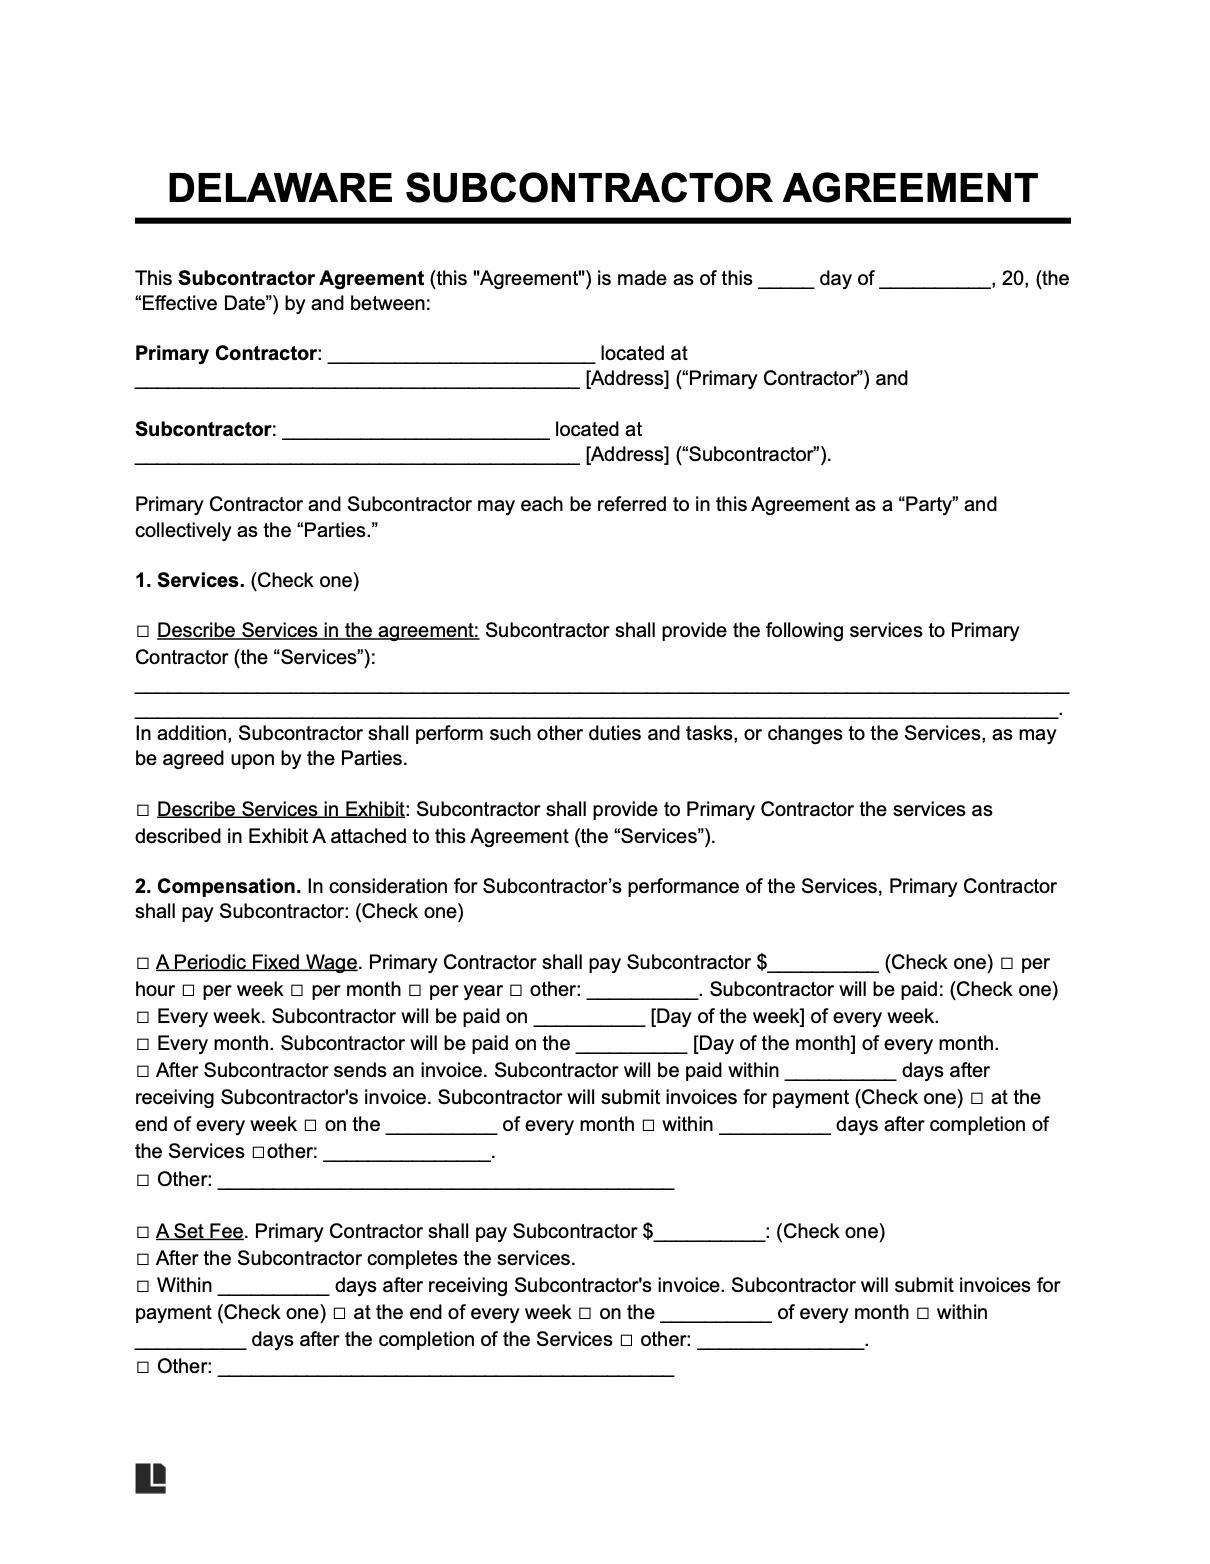 delaware subcontractor agreement template